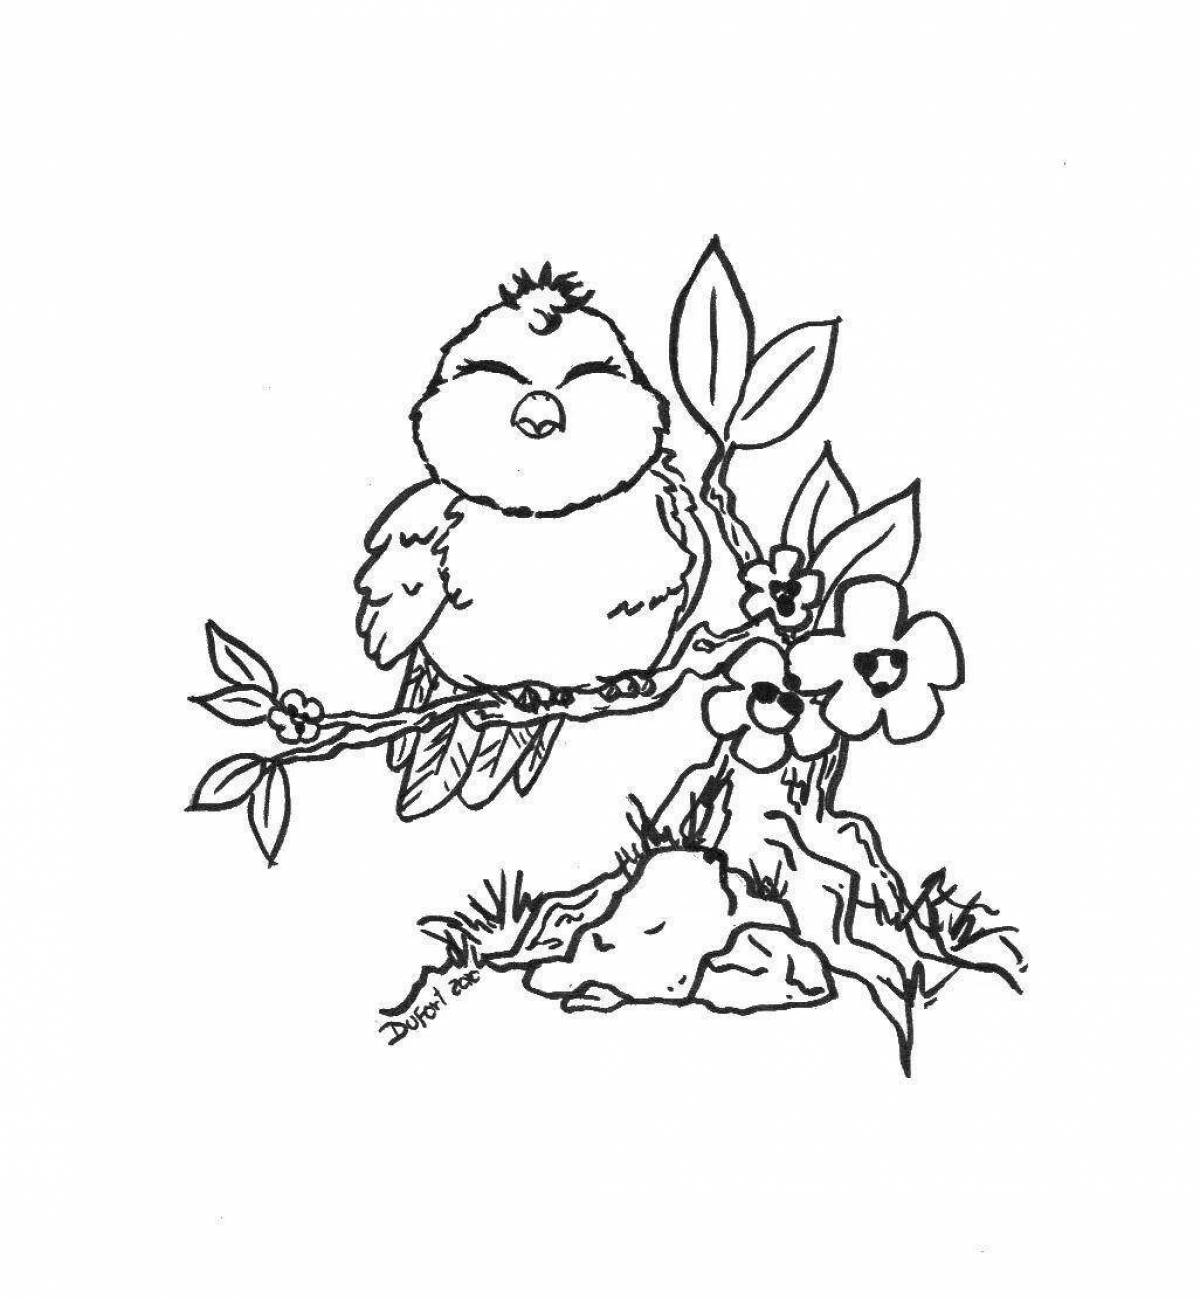 Fluffy bird on a branch